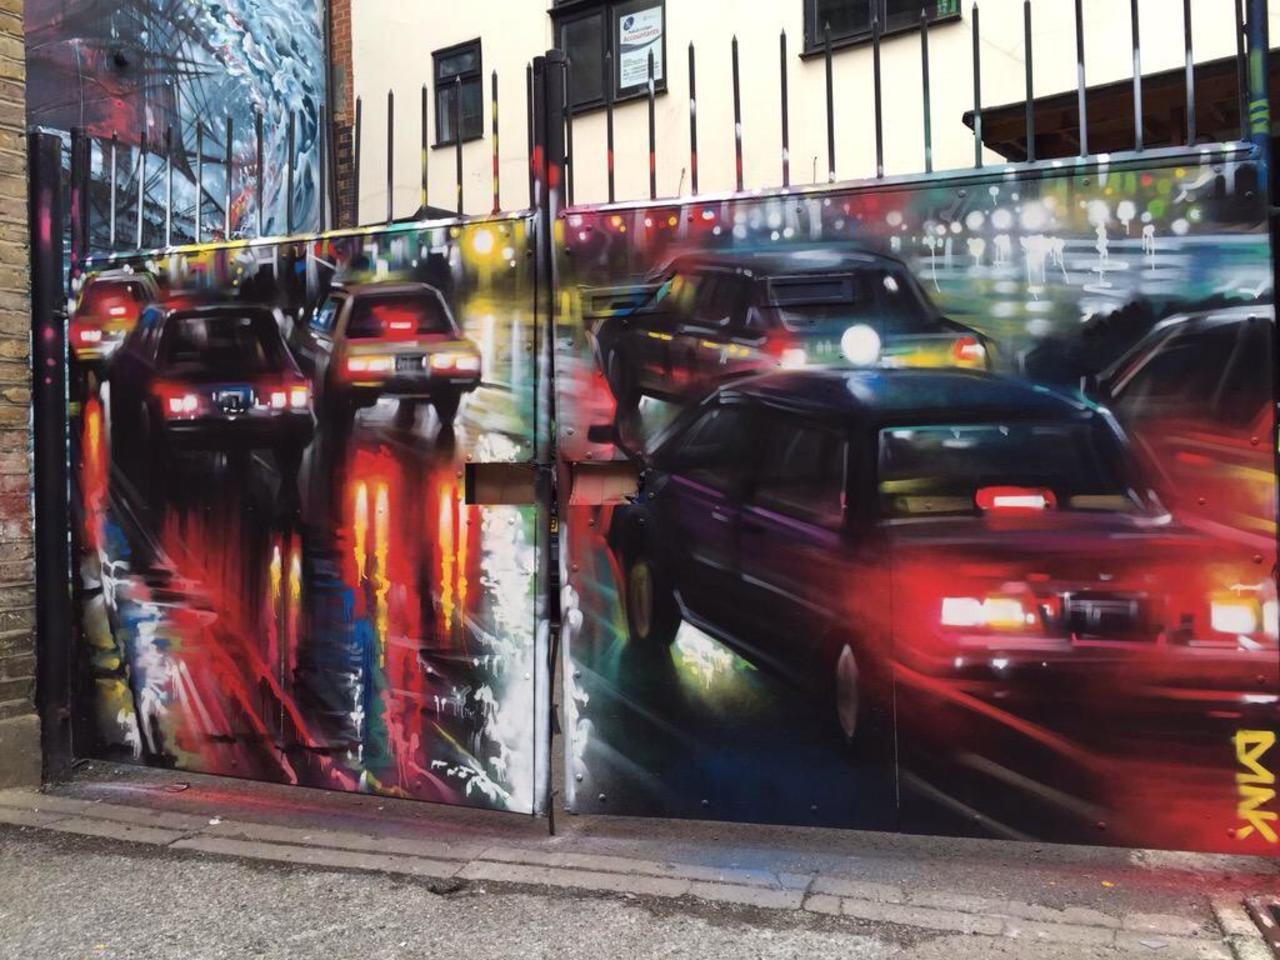 New Street Art by DanKitchener in Brick Lane London 

#art #graffiti #mural #streetart http://t.co/uL1rj1v9u1